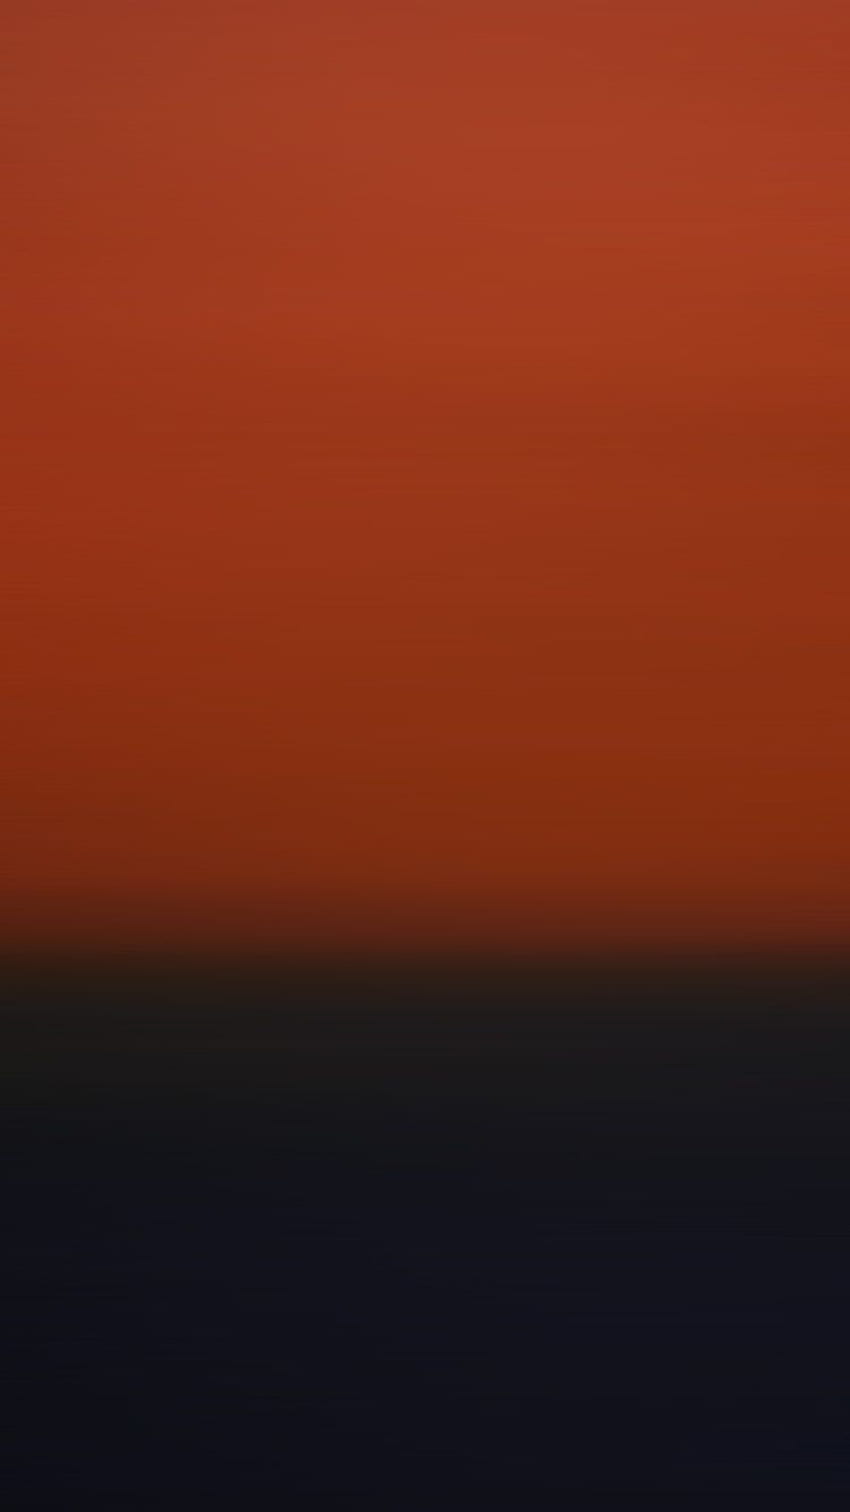 Motion Flat Orange Dark Gradation Blur. Oranye , iPhone 6 Plus , Gelap wallpaper ponsel HD